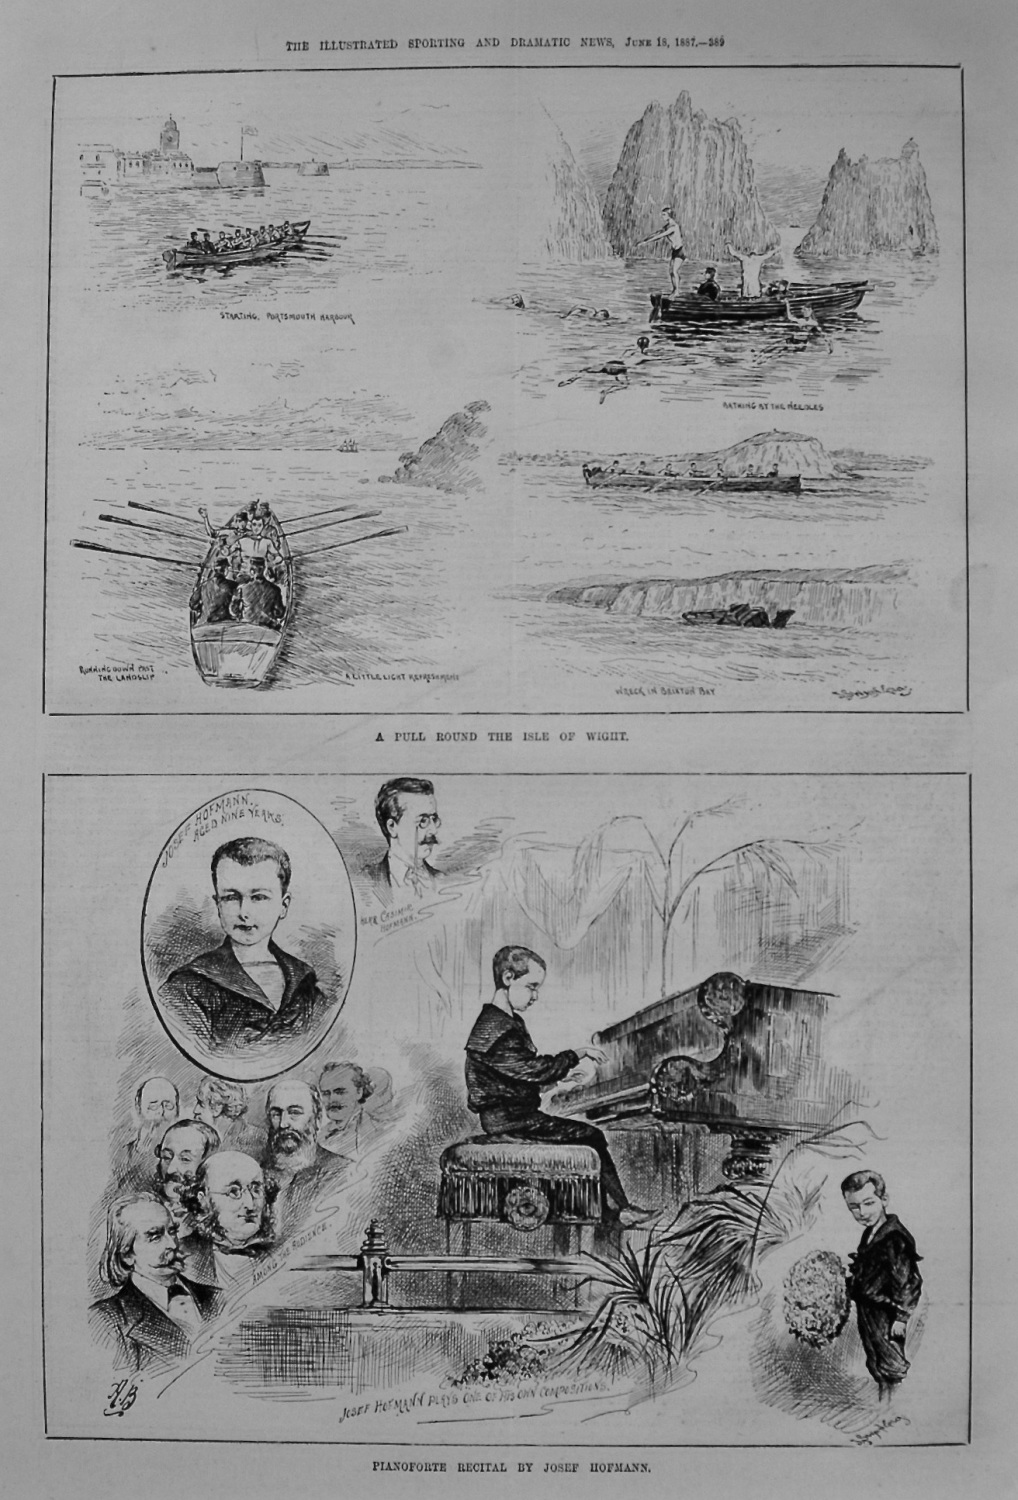 Pianoforte Recital by Josef Hofmann. 1887